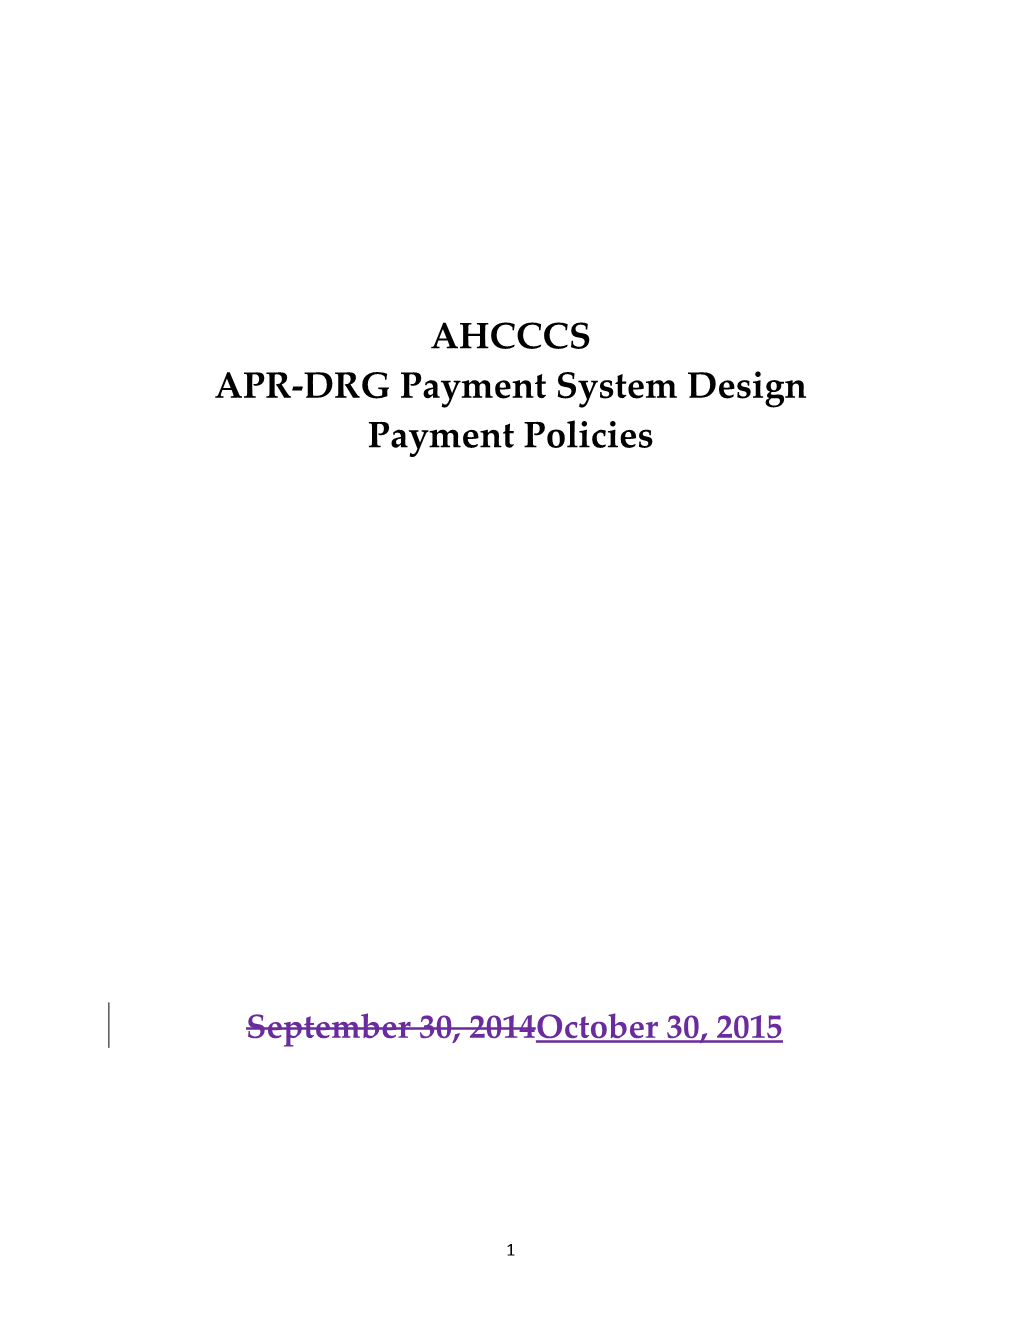 APR-DRG Payment System Design